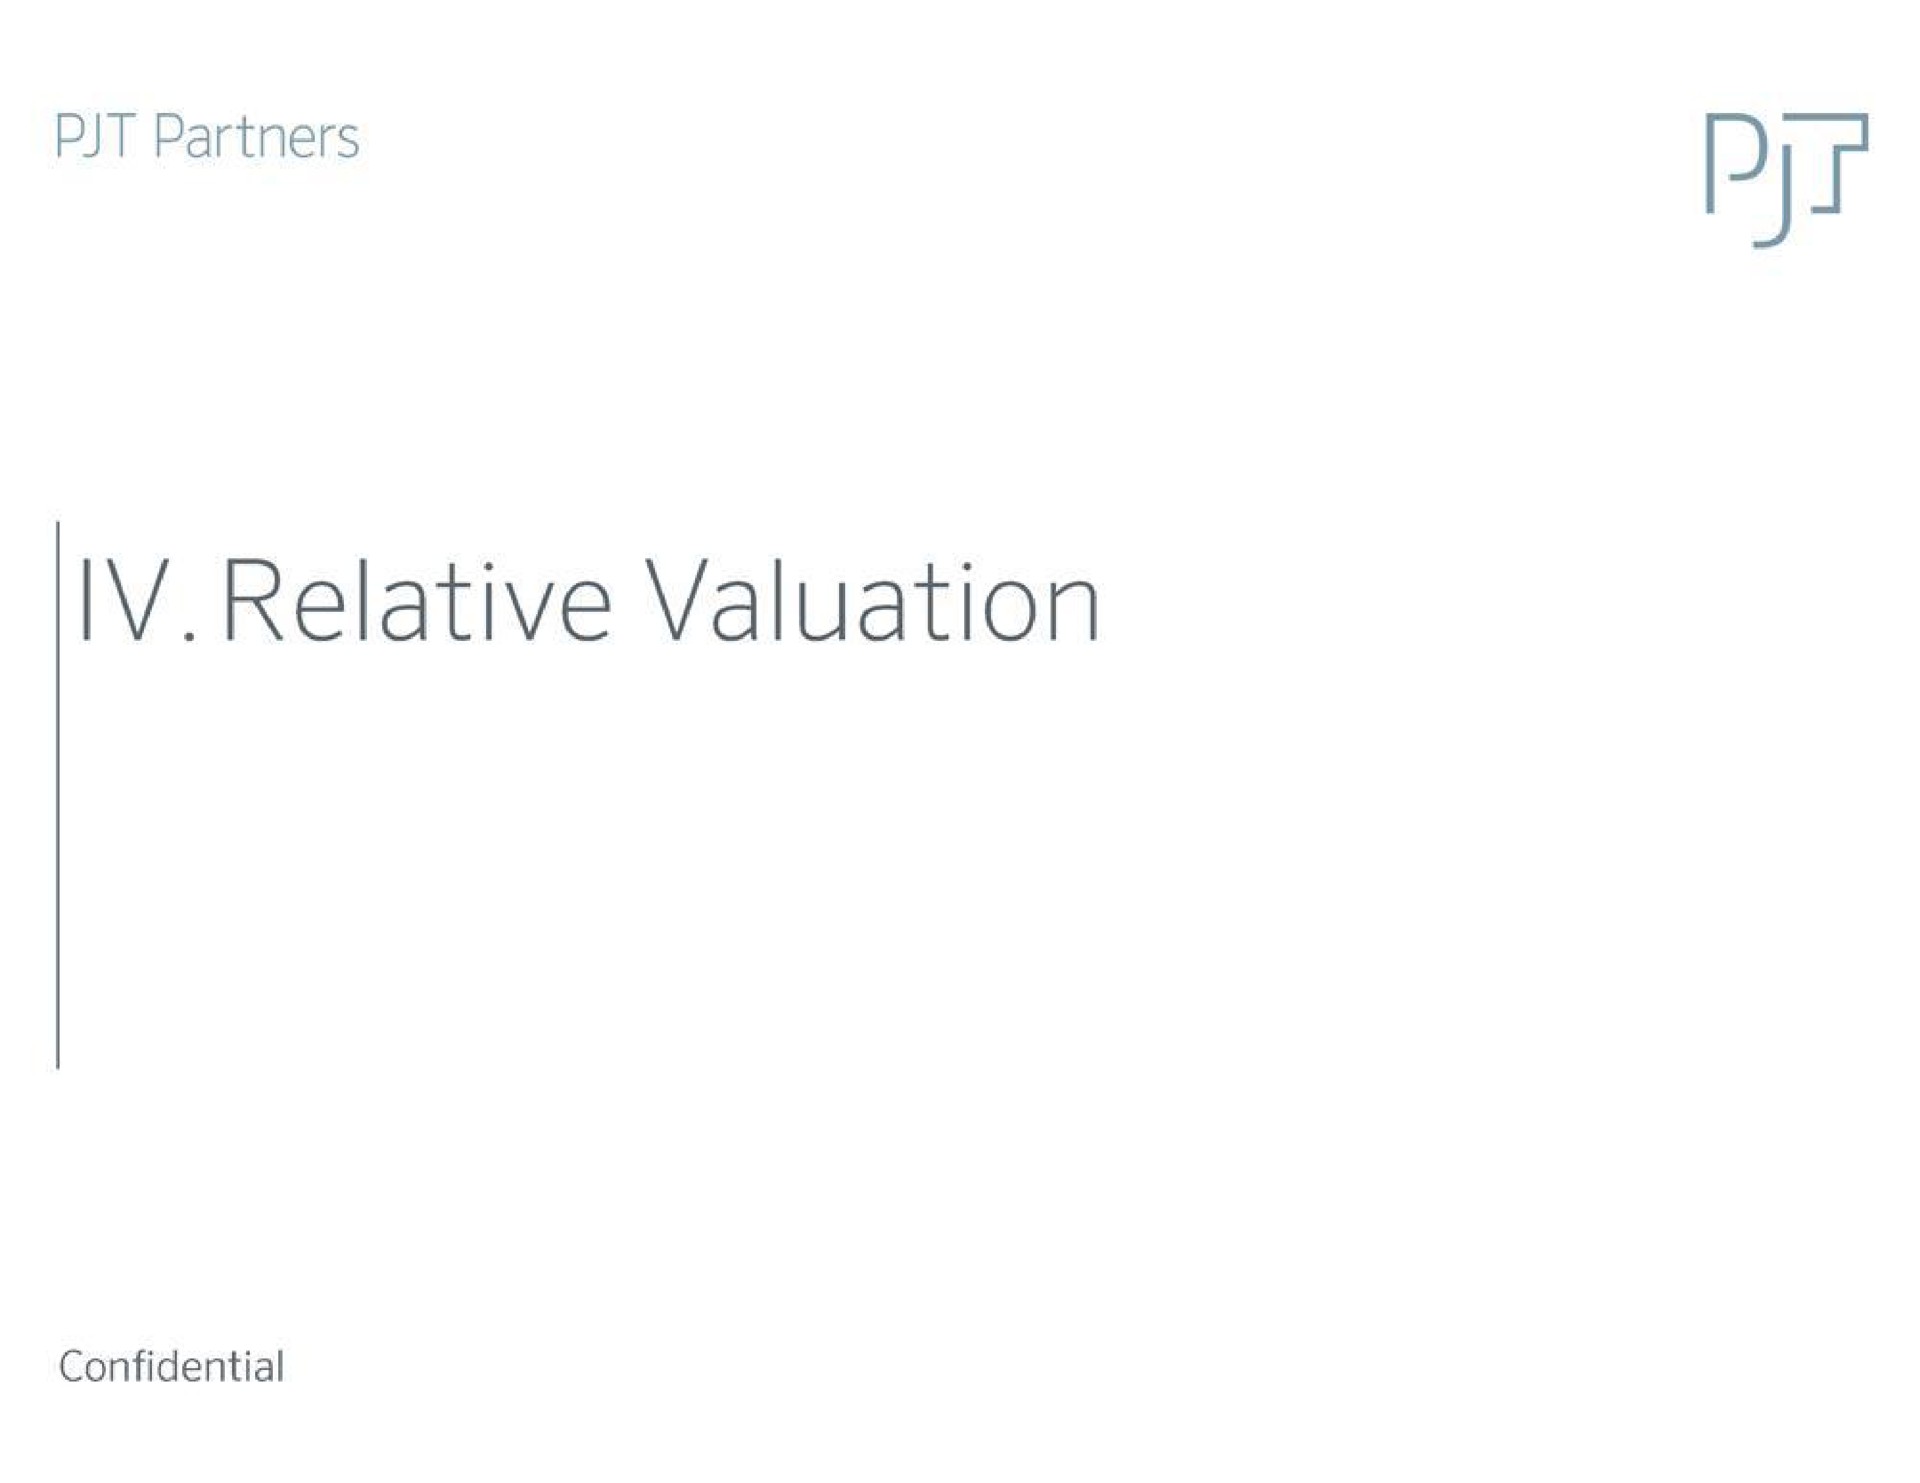 partners i relative valuation | PJT Partners